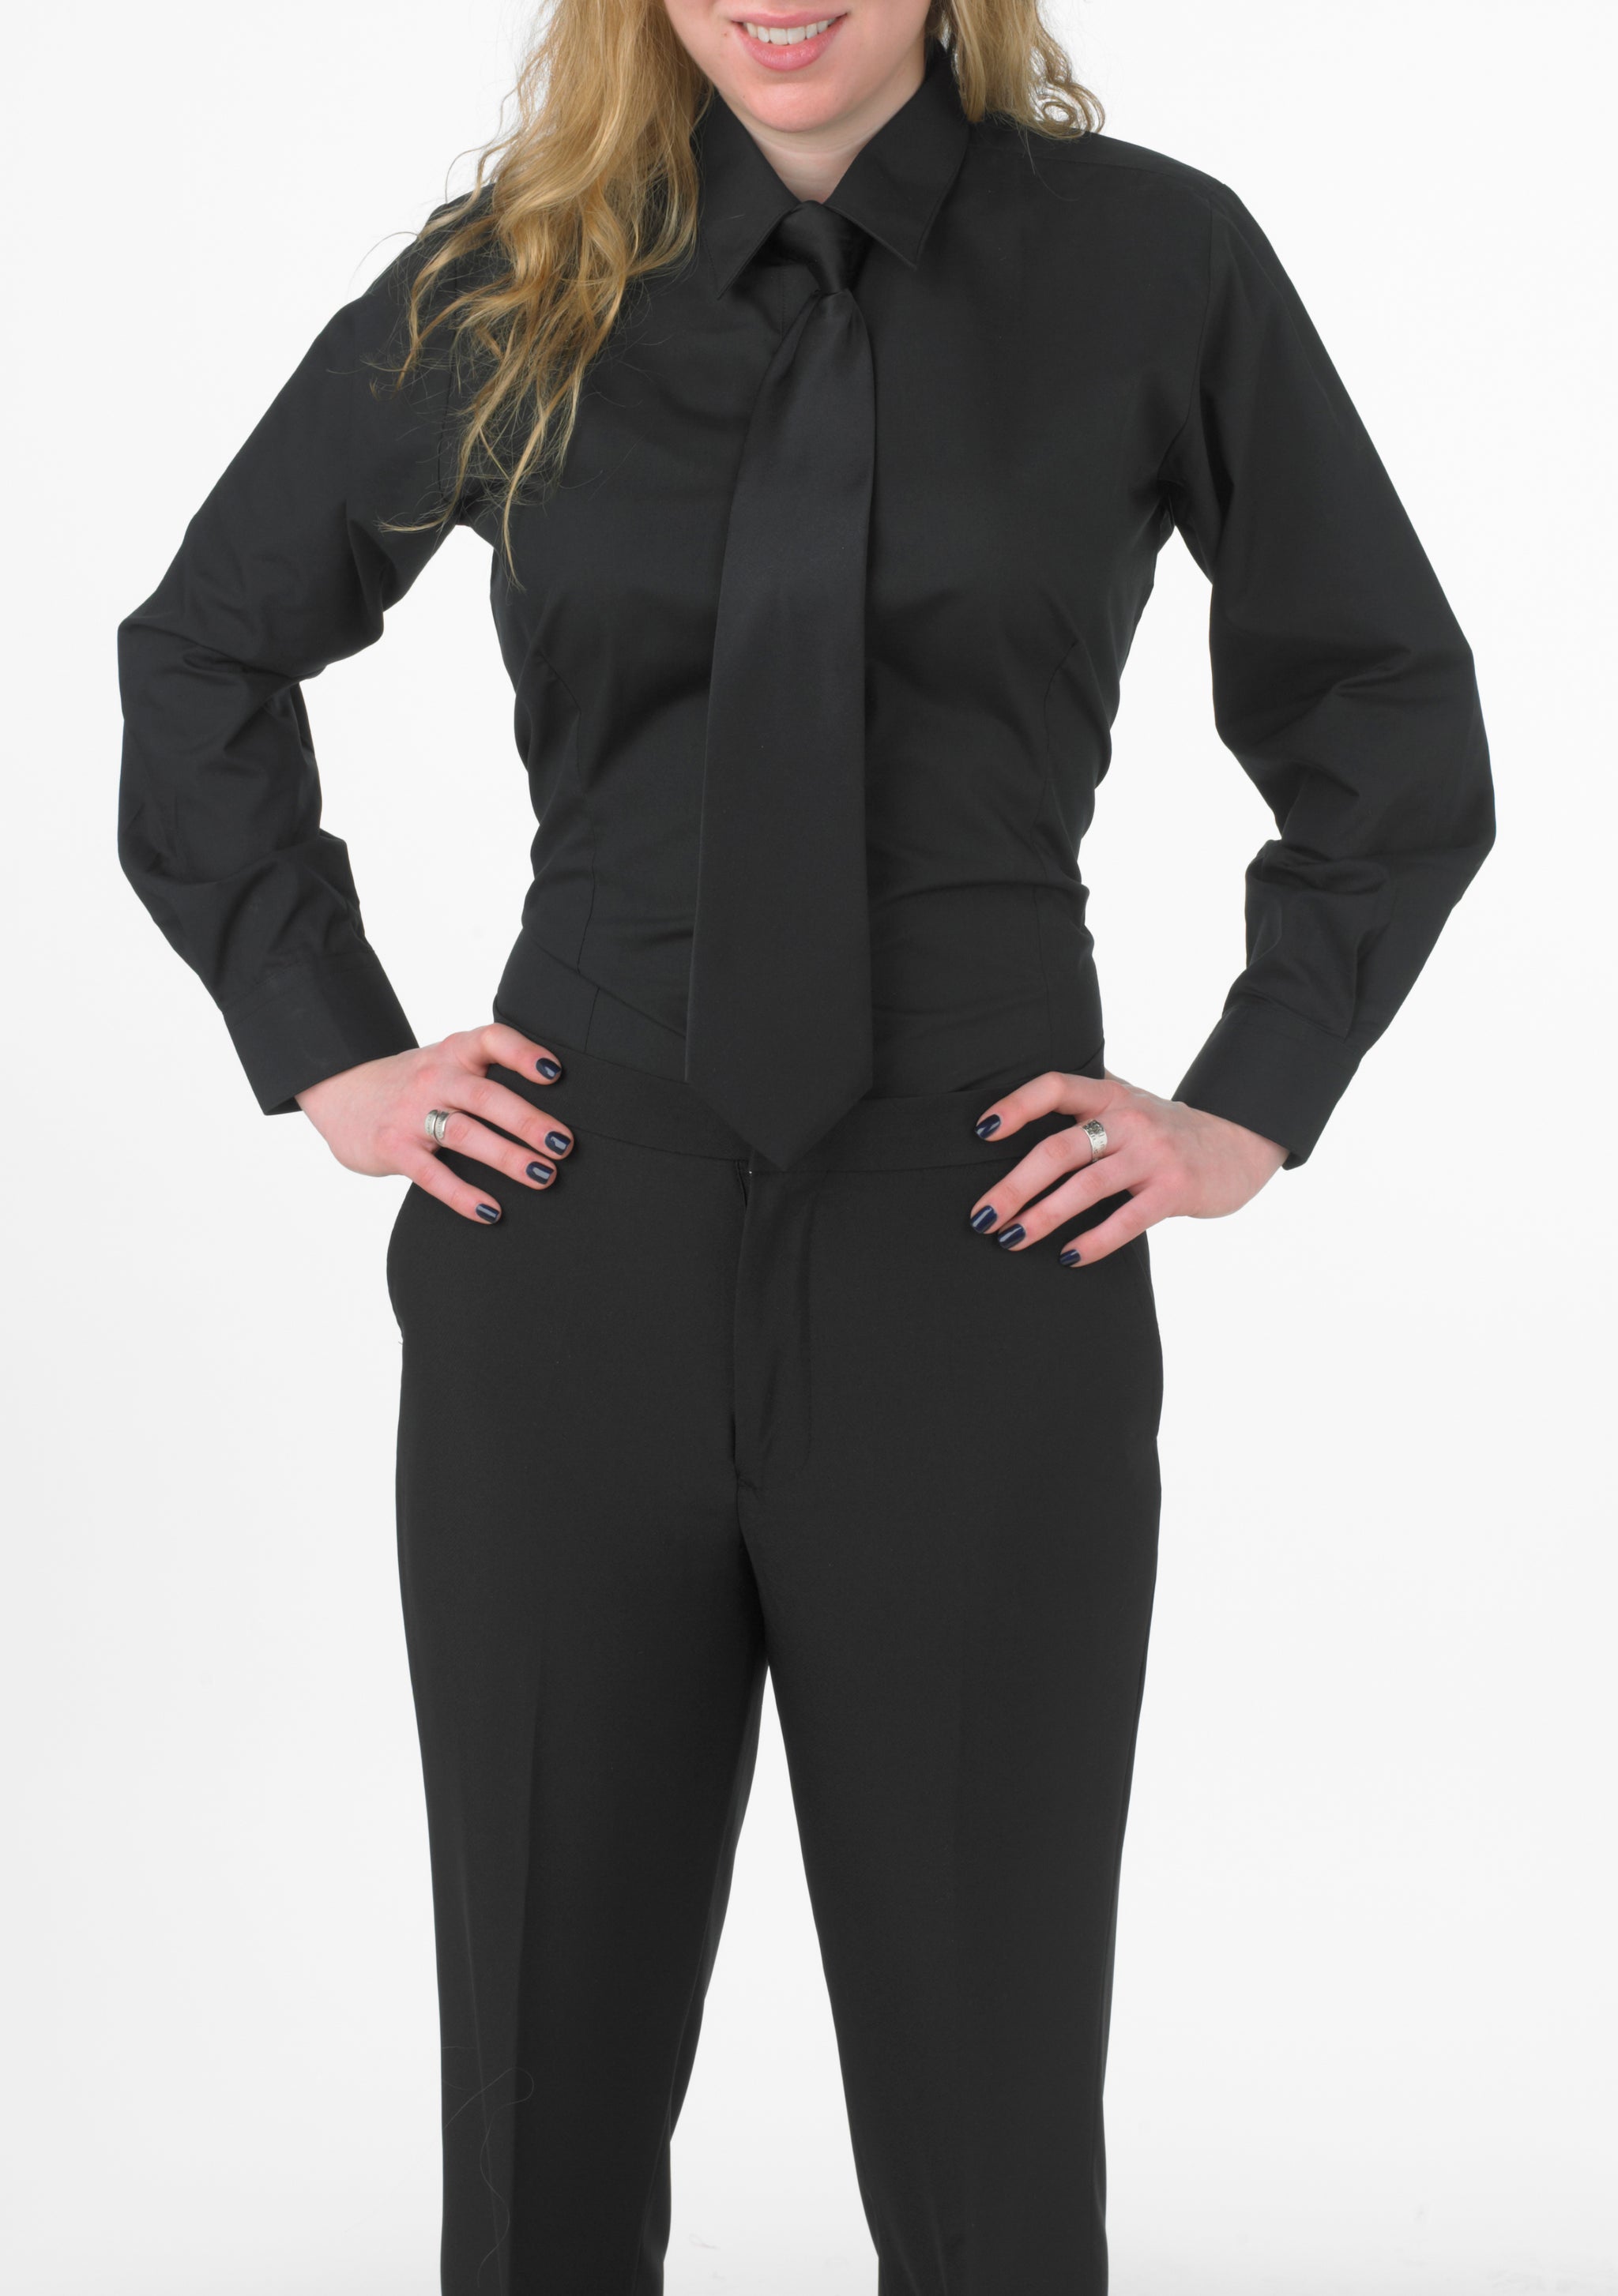 Women's Black, Long-Sleeve Form-Fitted Dress Shirt - 99tux